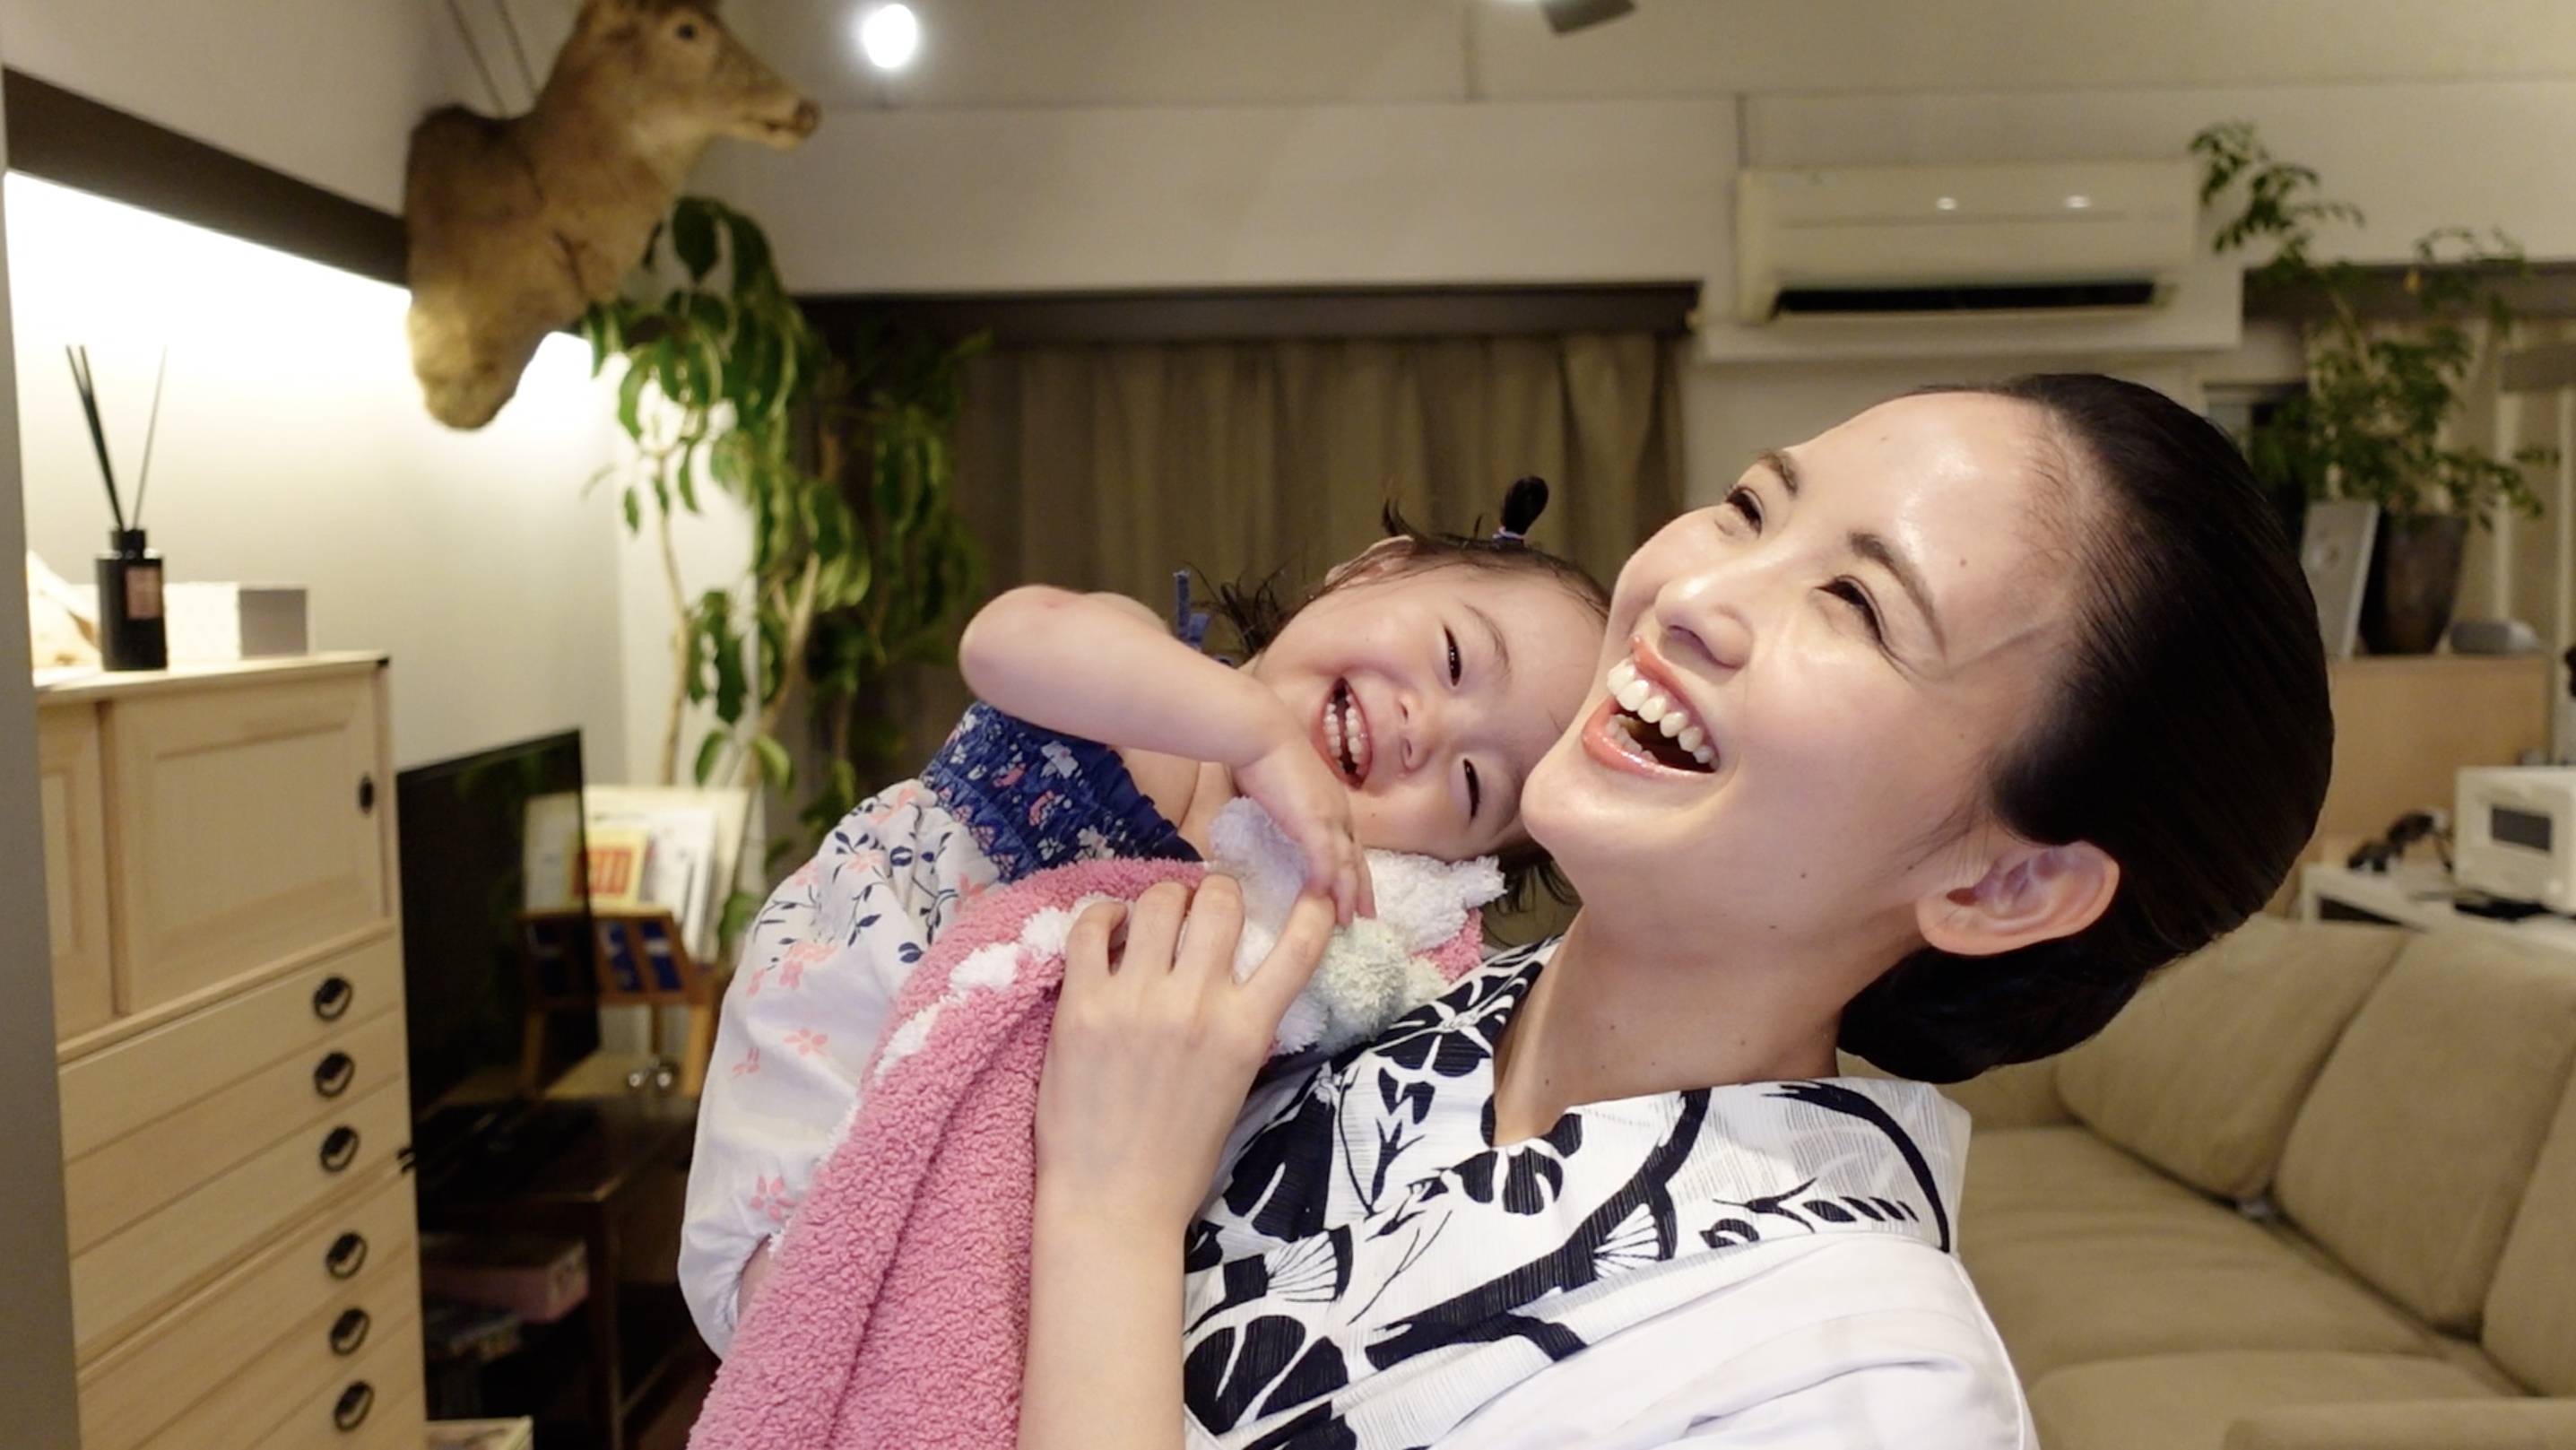 Geisha-turned-YouTuber Kimono Mom taps into the heart of parenting